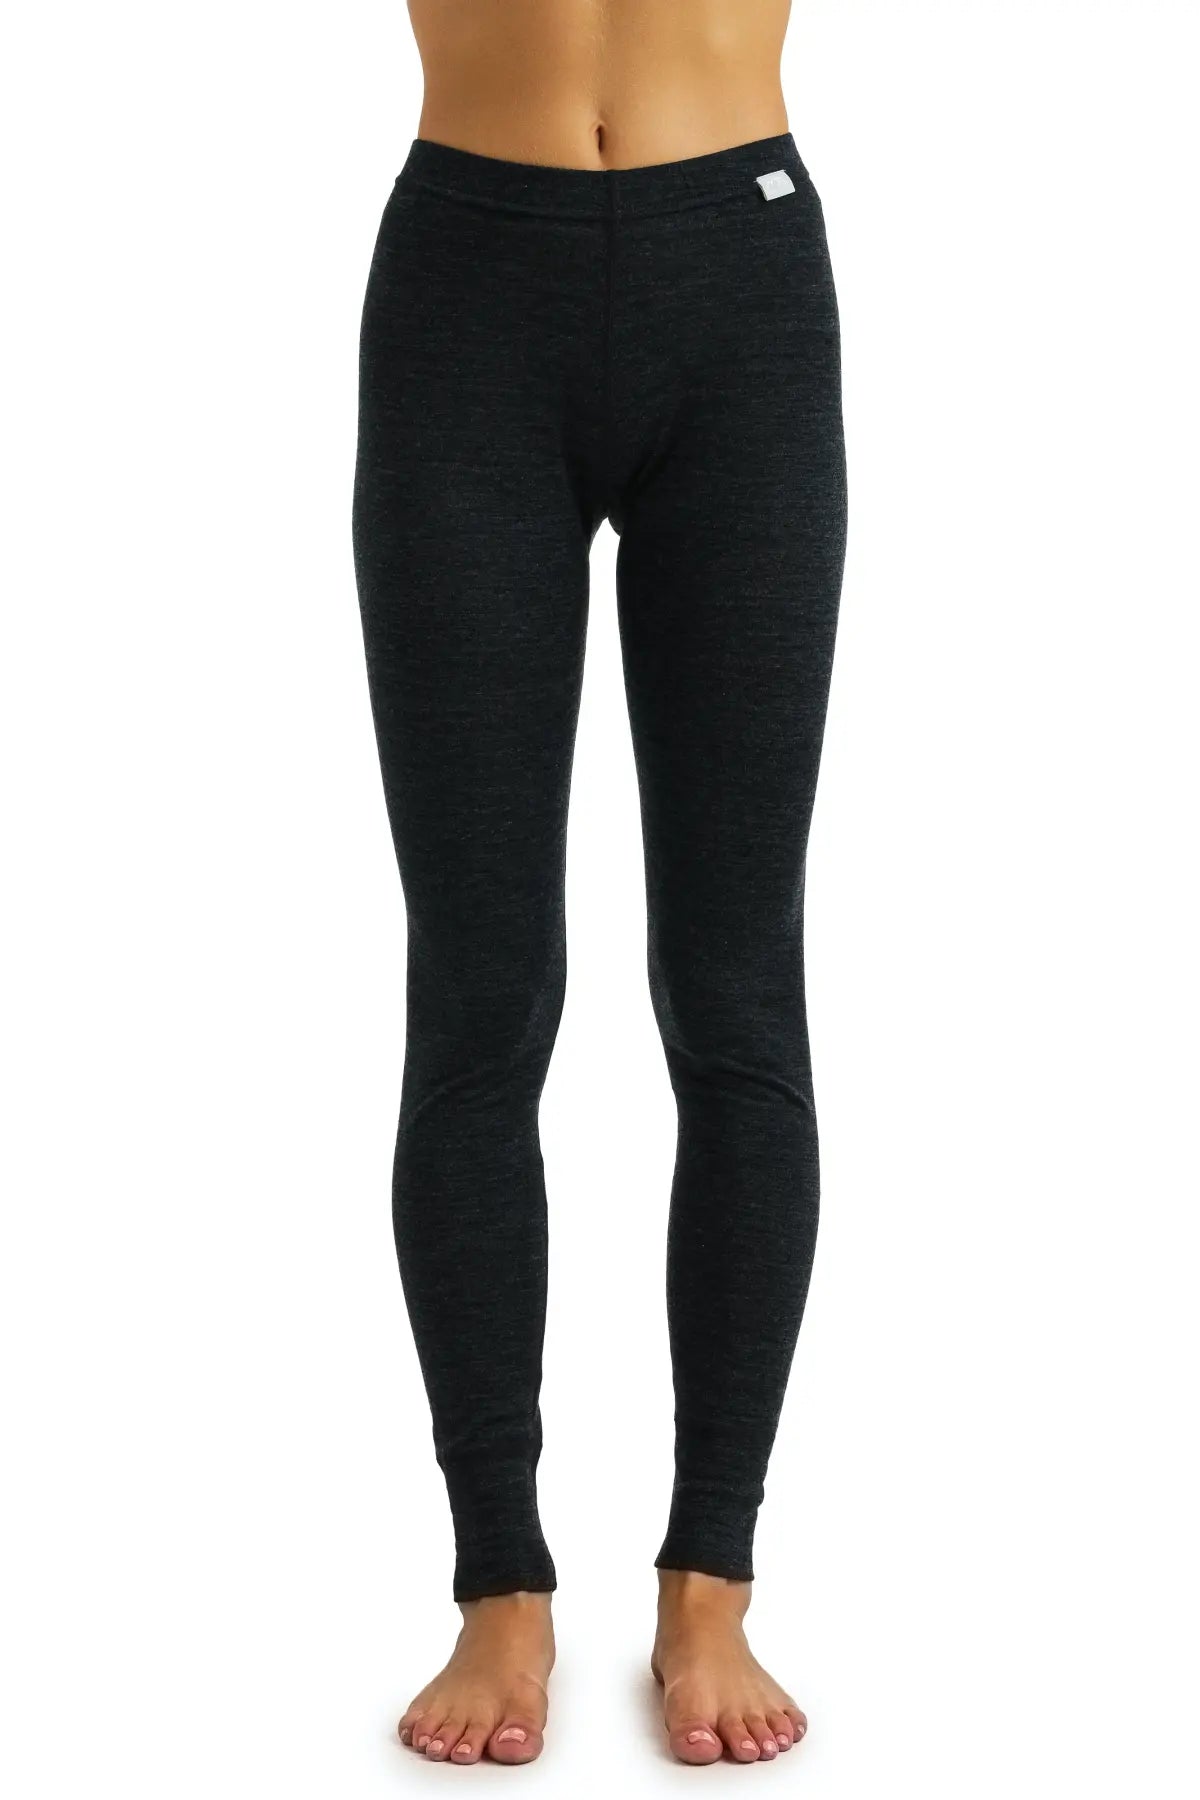 Women's Merino Wool Pants - Base Layer Leggings Charcoal Grey, Bottom, Underwear, Thermal, Lightweight